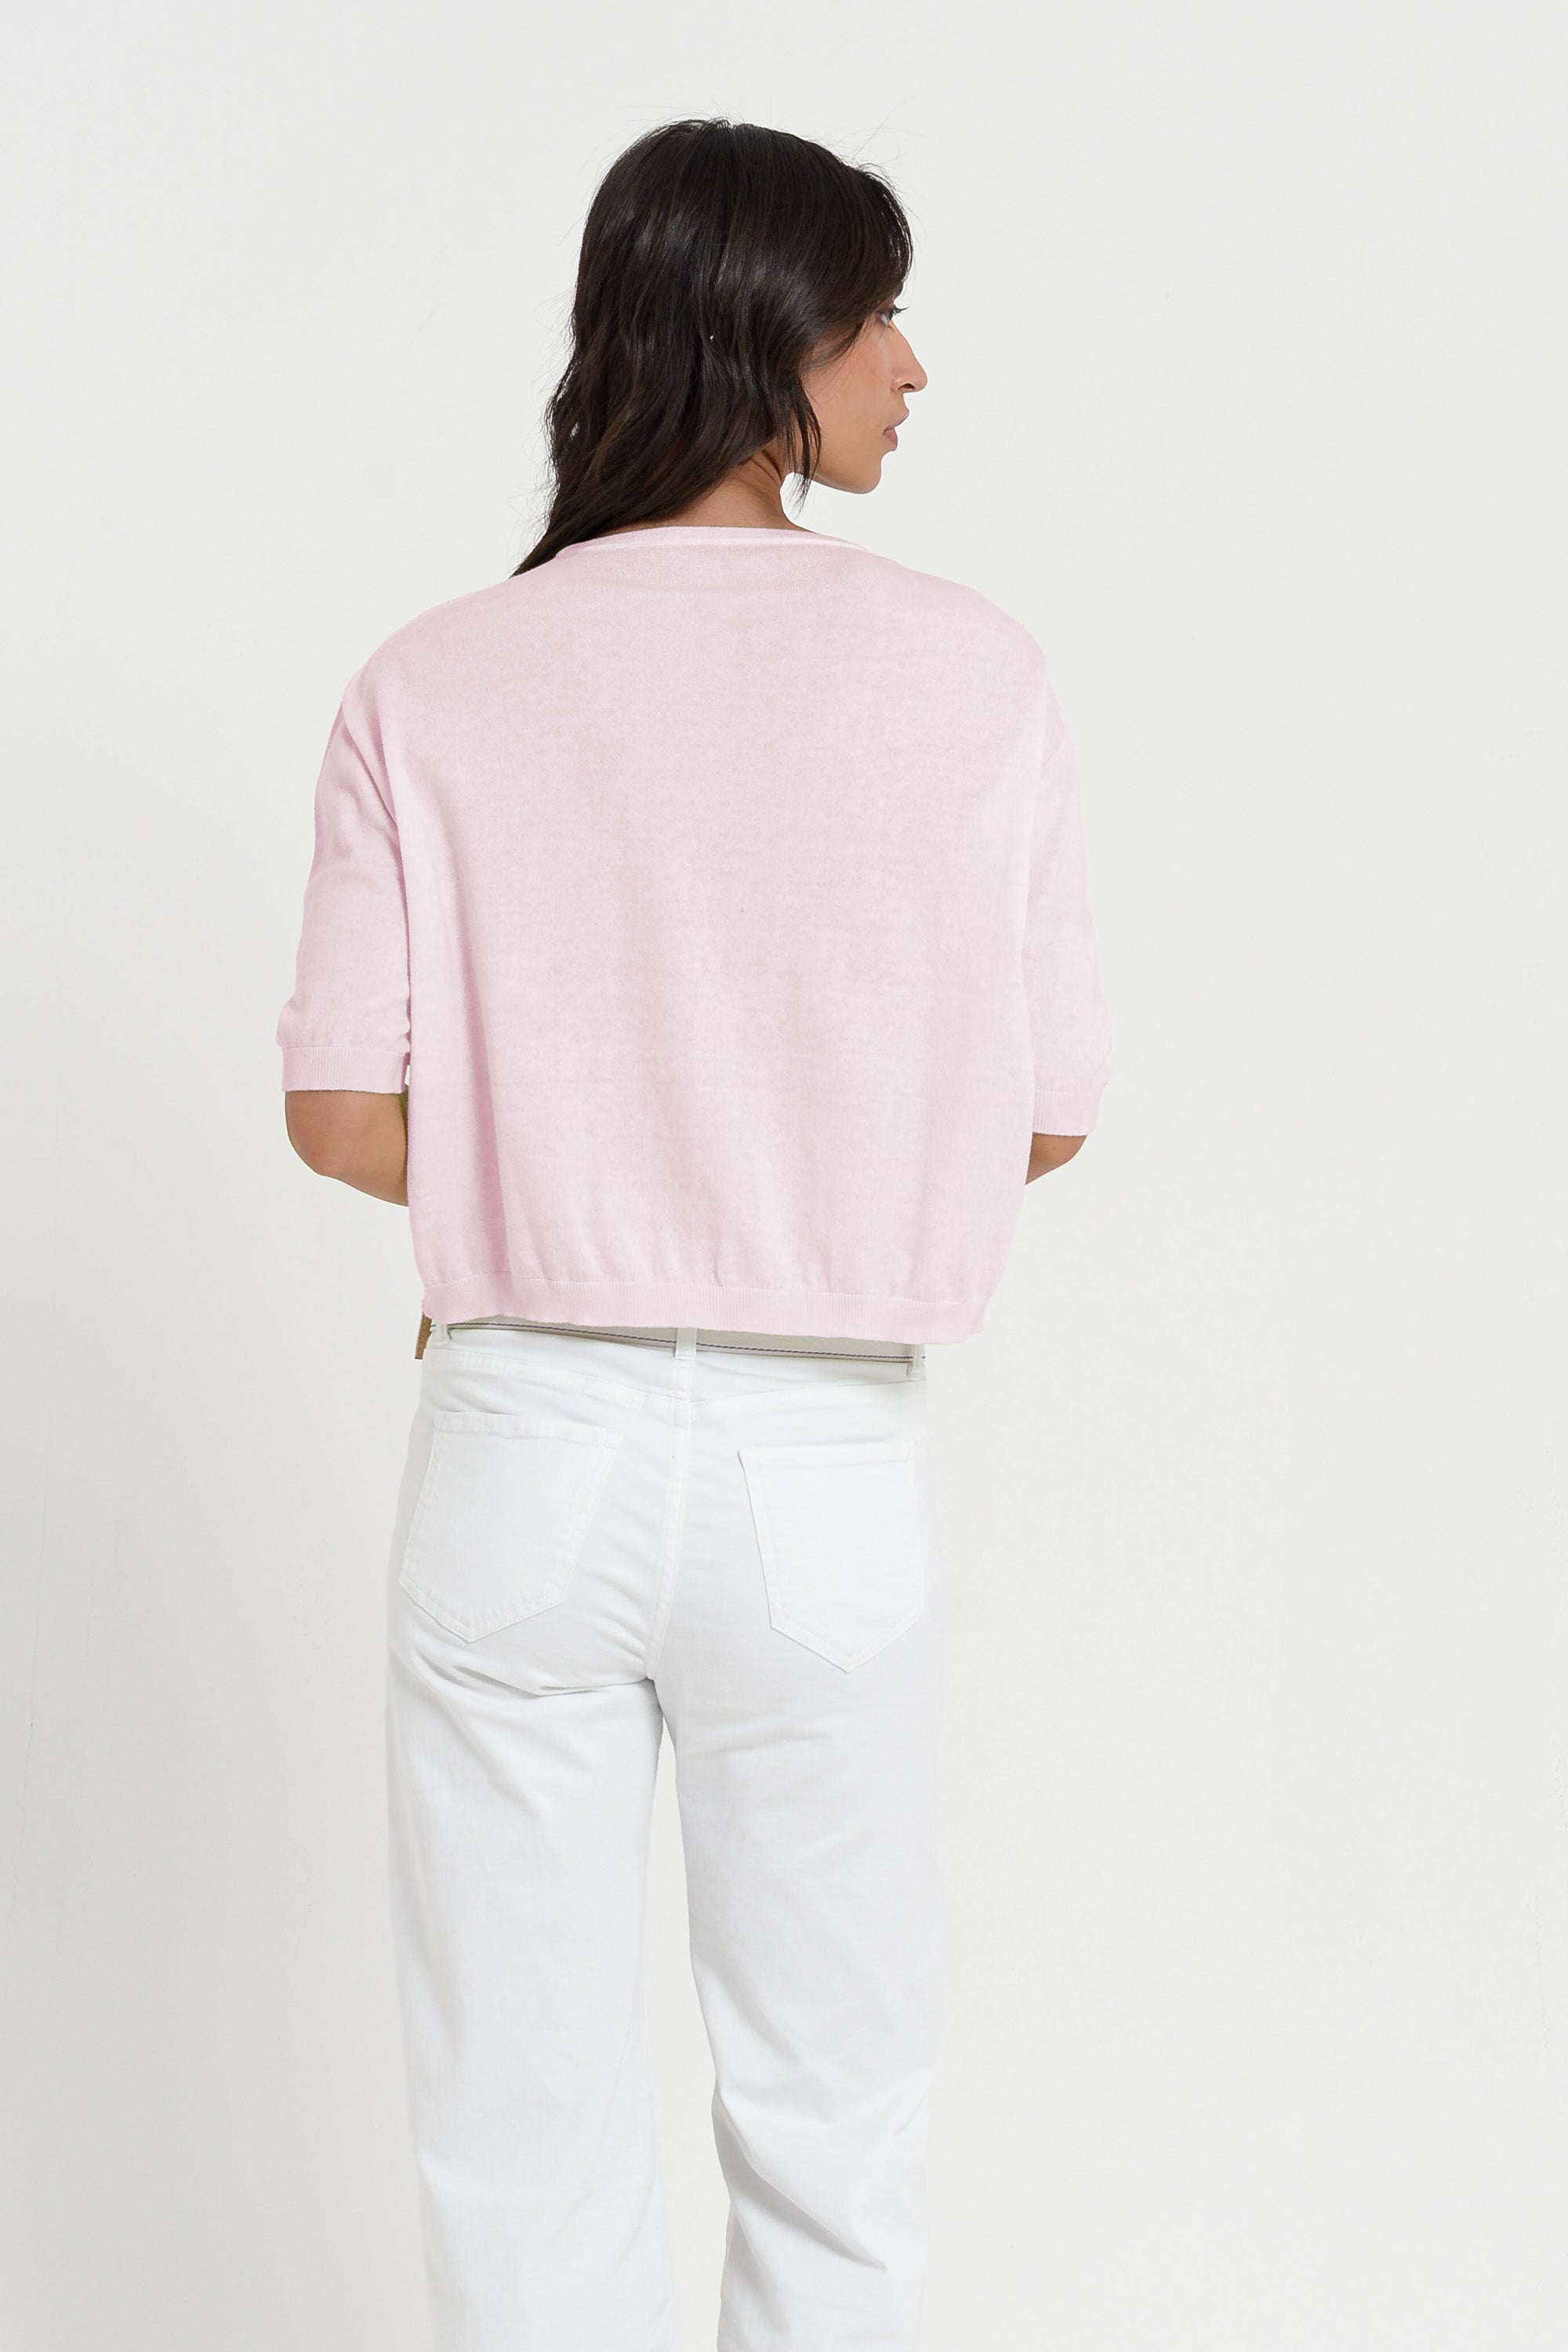 Kriss Knit - Women's Short Sleeve Cropped Sweater - Rose